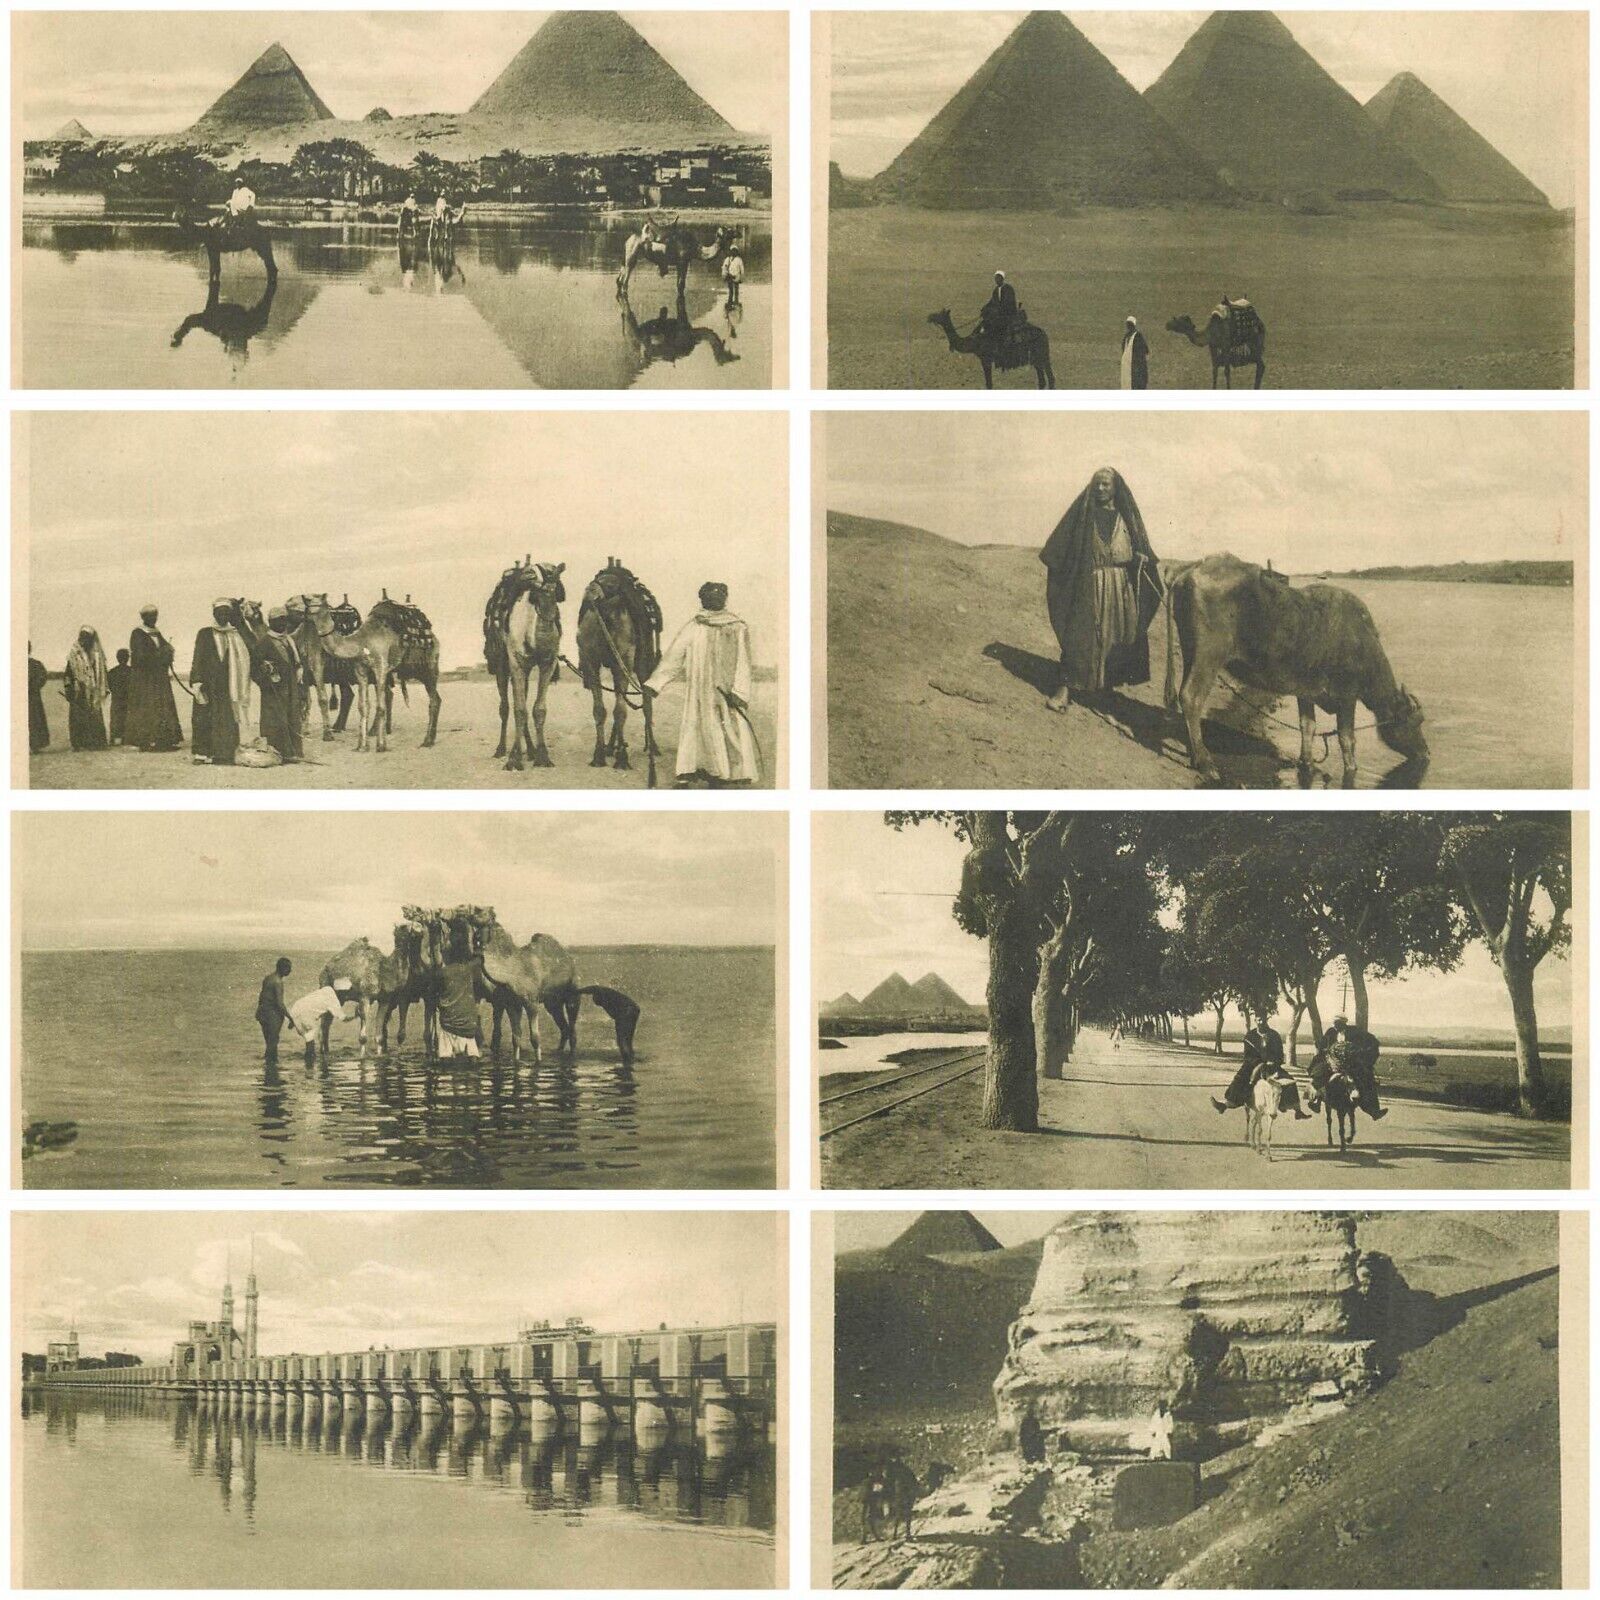 Egypt Cairo community life and landmarks pyramids of Giza Sphinx Nile lot of 8